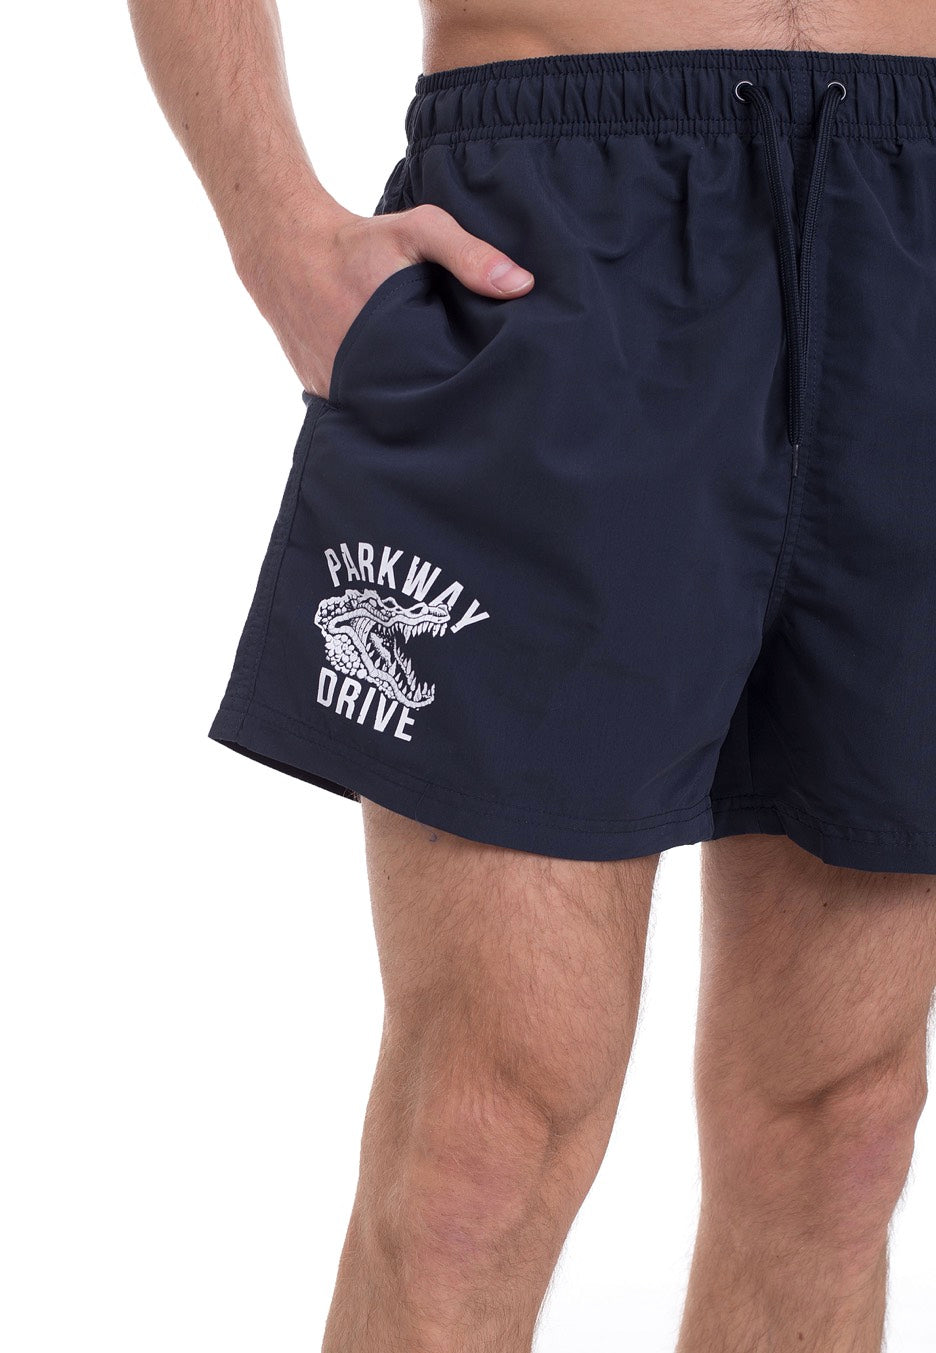 Parkway Drive - Croc Navy - Shorts